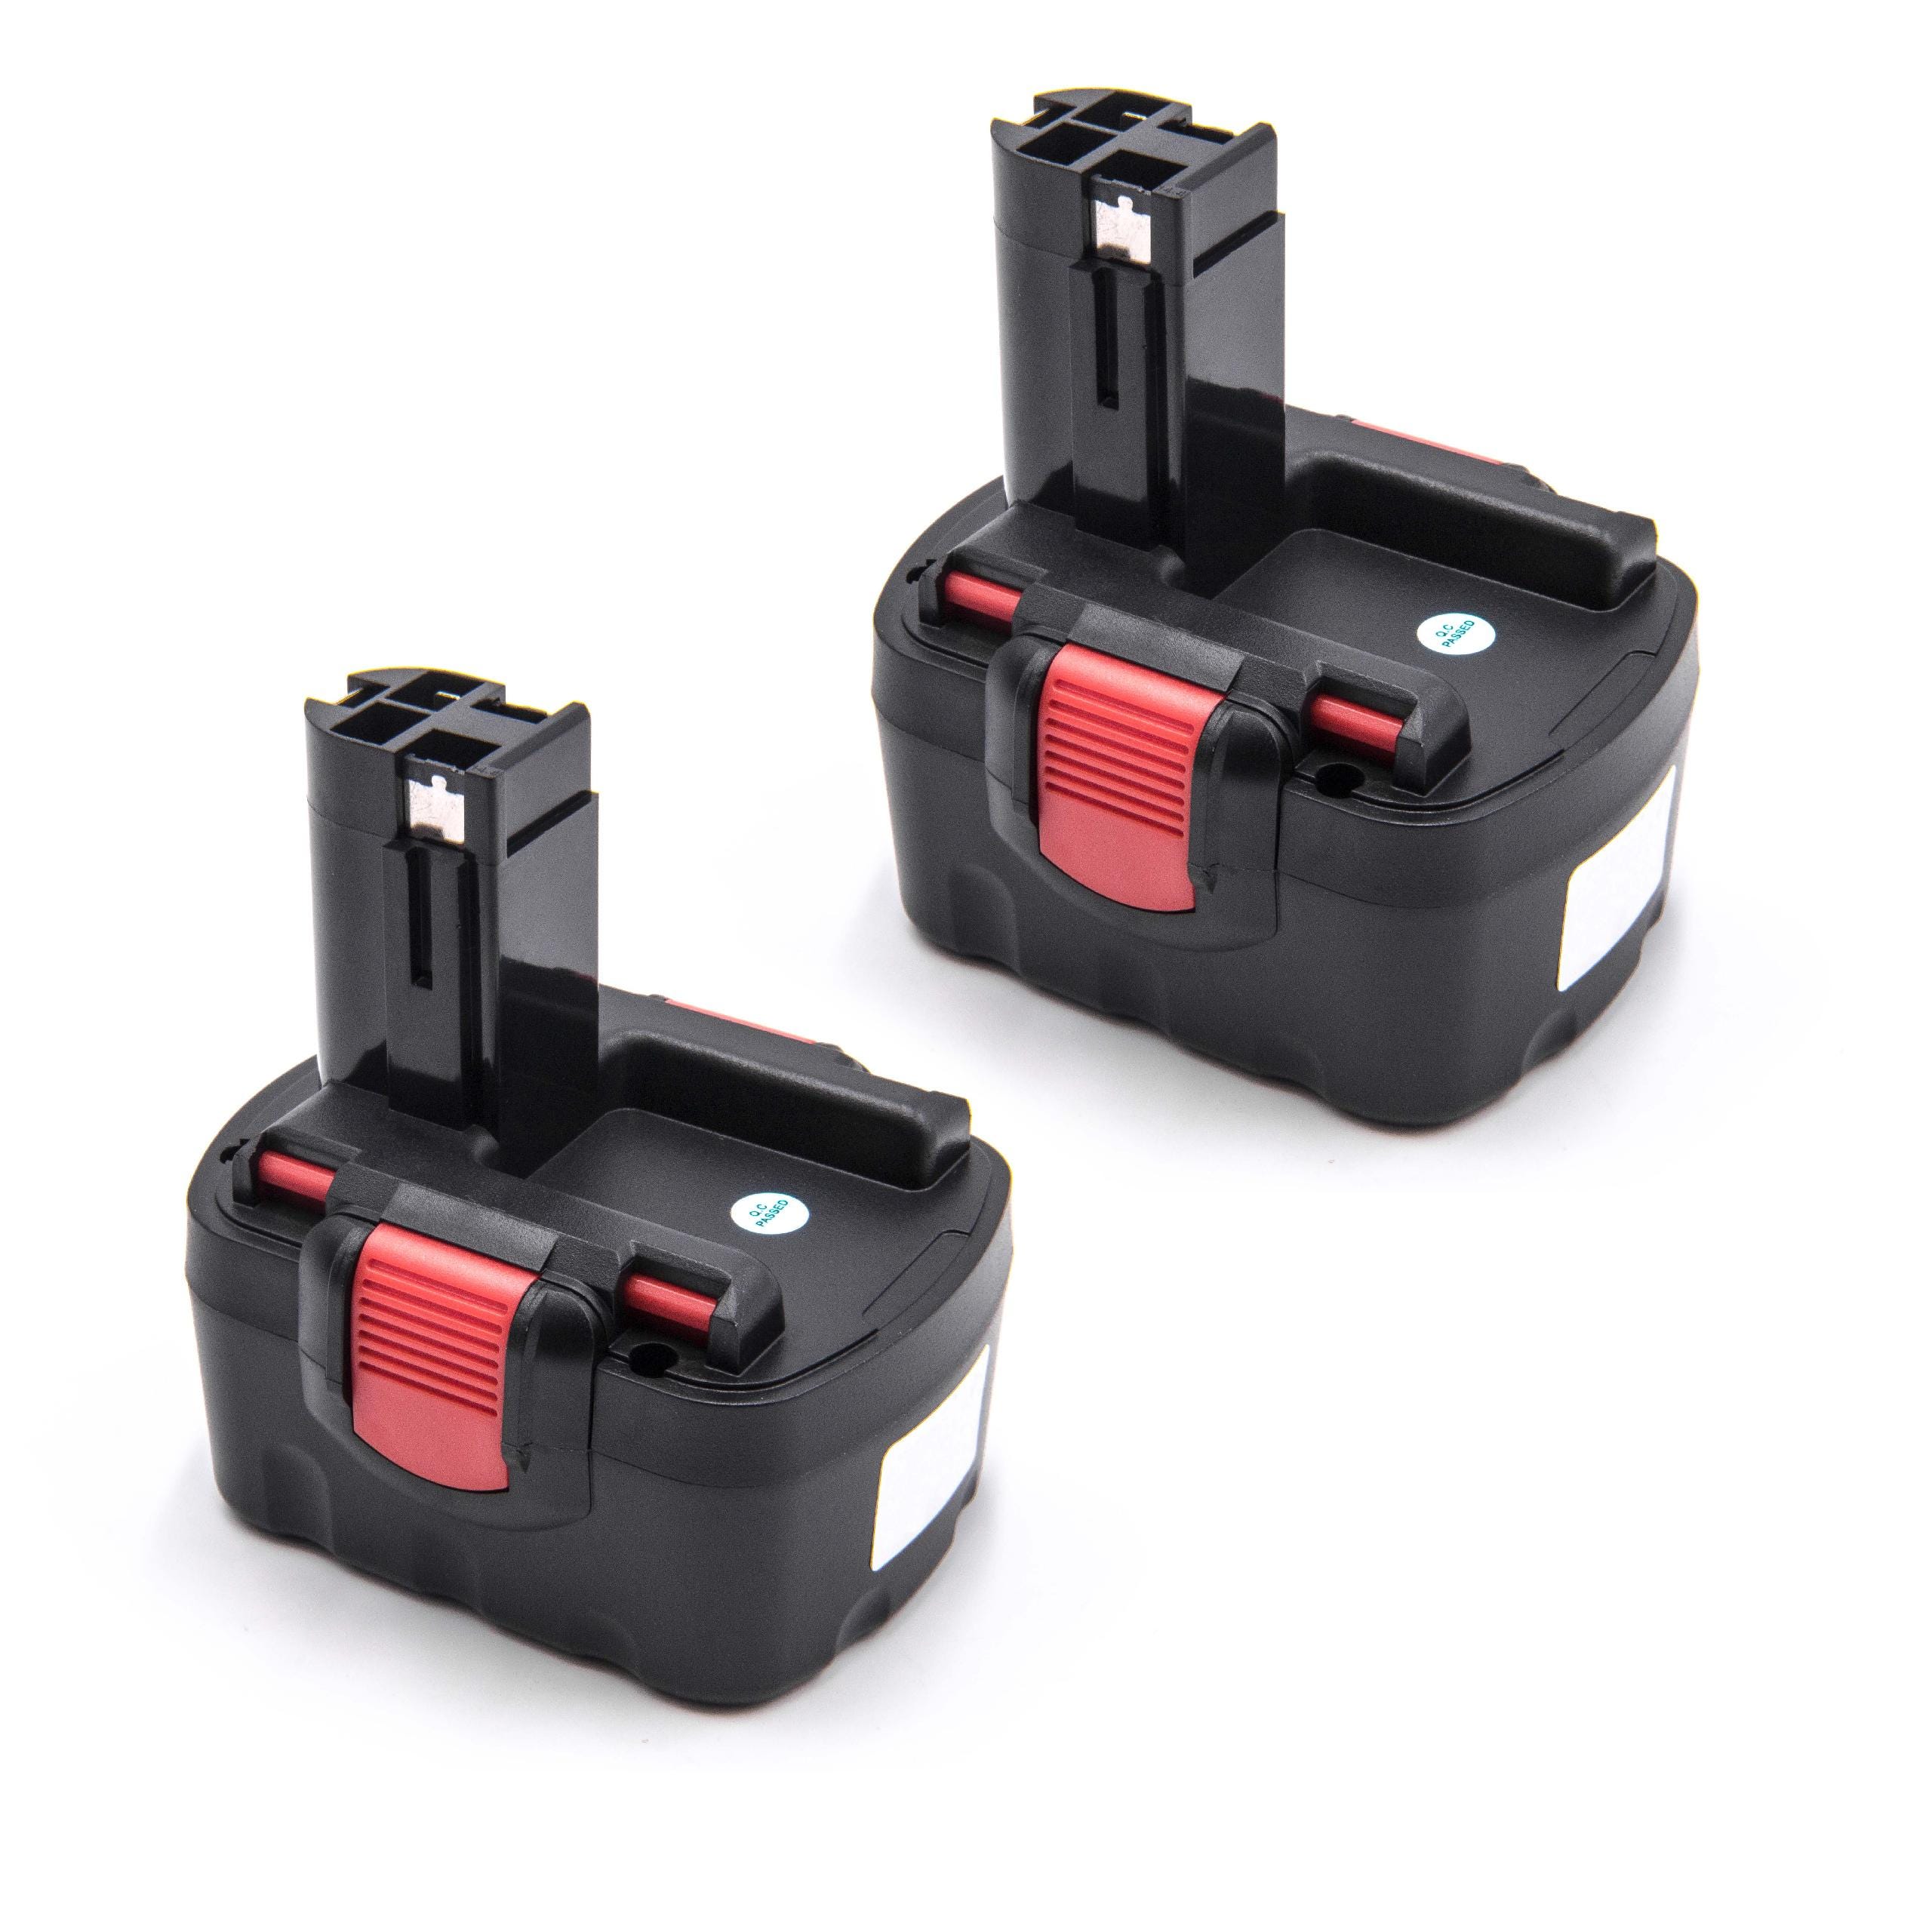 Vhbw 2x Batterie compatible avec Bosch PSR 14.4-2, PSR 14.4VE-2(/B),  PSR1440, PSR1440/B, PST 14.4V, PSR 140 outil électrique (1500 mAh, NiMH,  14,4 V)